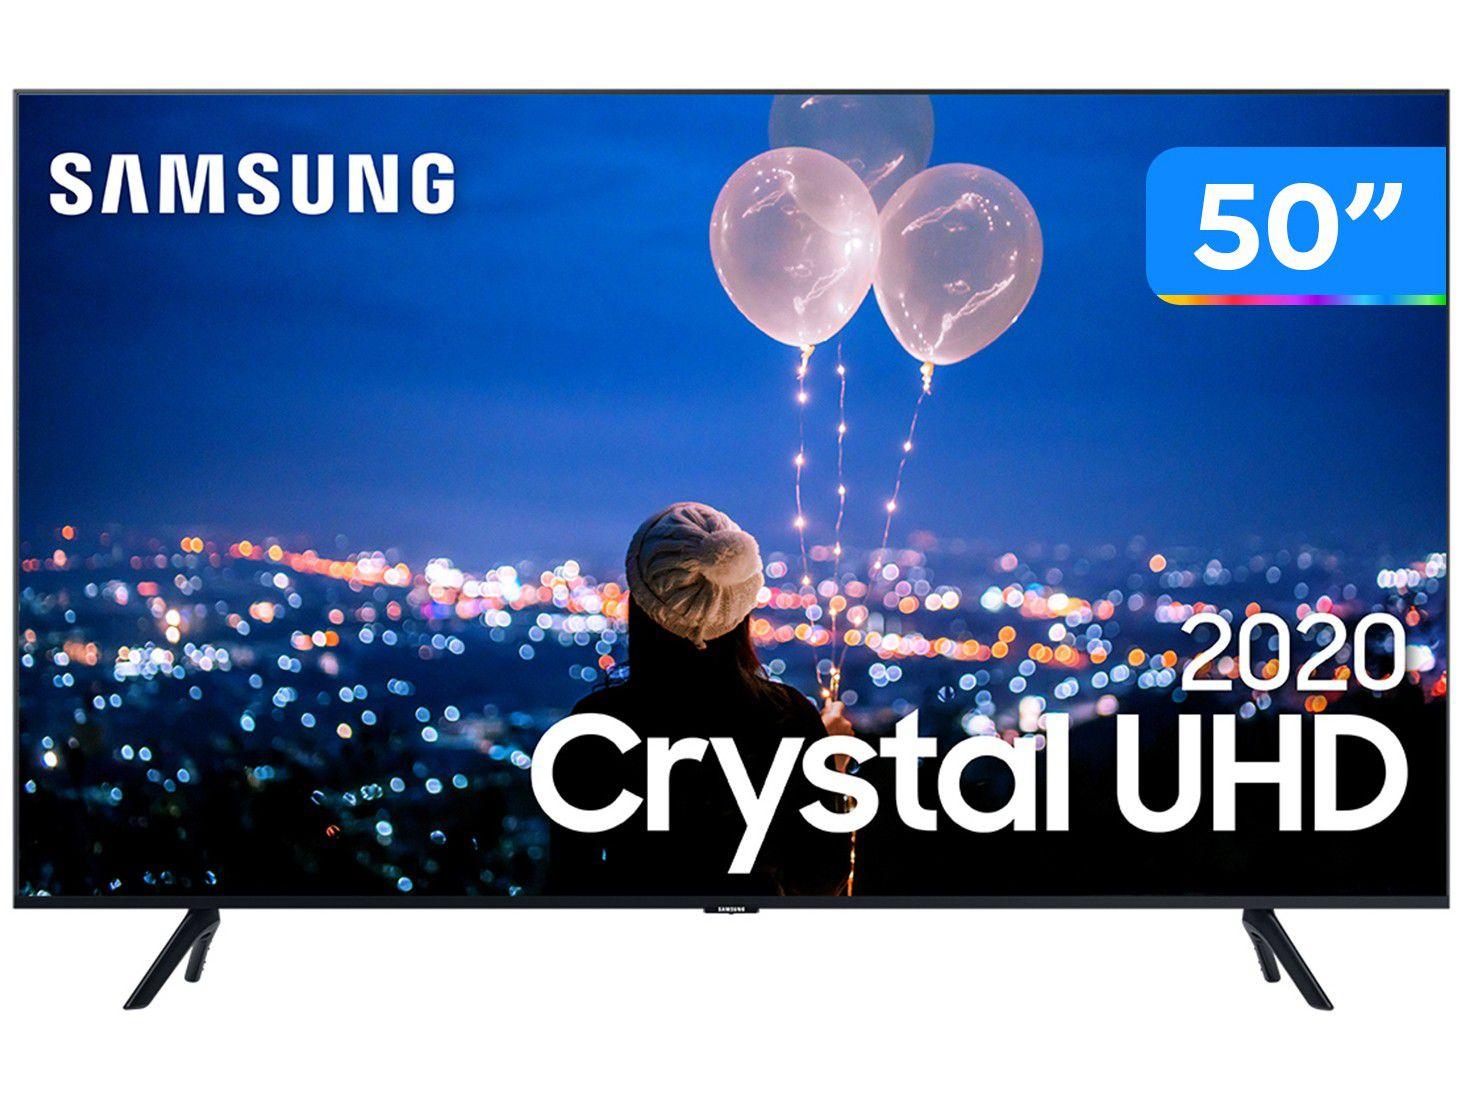 Smart TV Crystal UHD 4K LED 50” Samsung - 50TU8000 Wi-Fi Bluetooth HDR 3 HDMI 2 USB